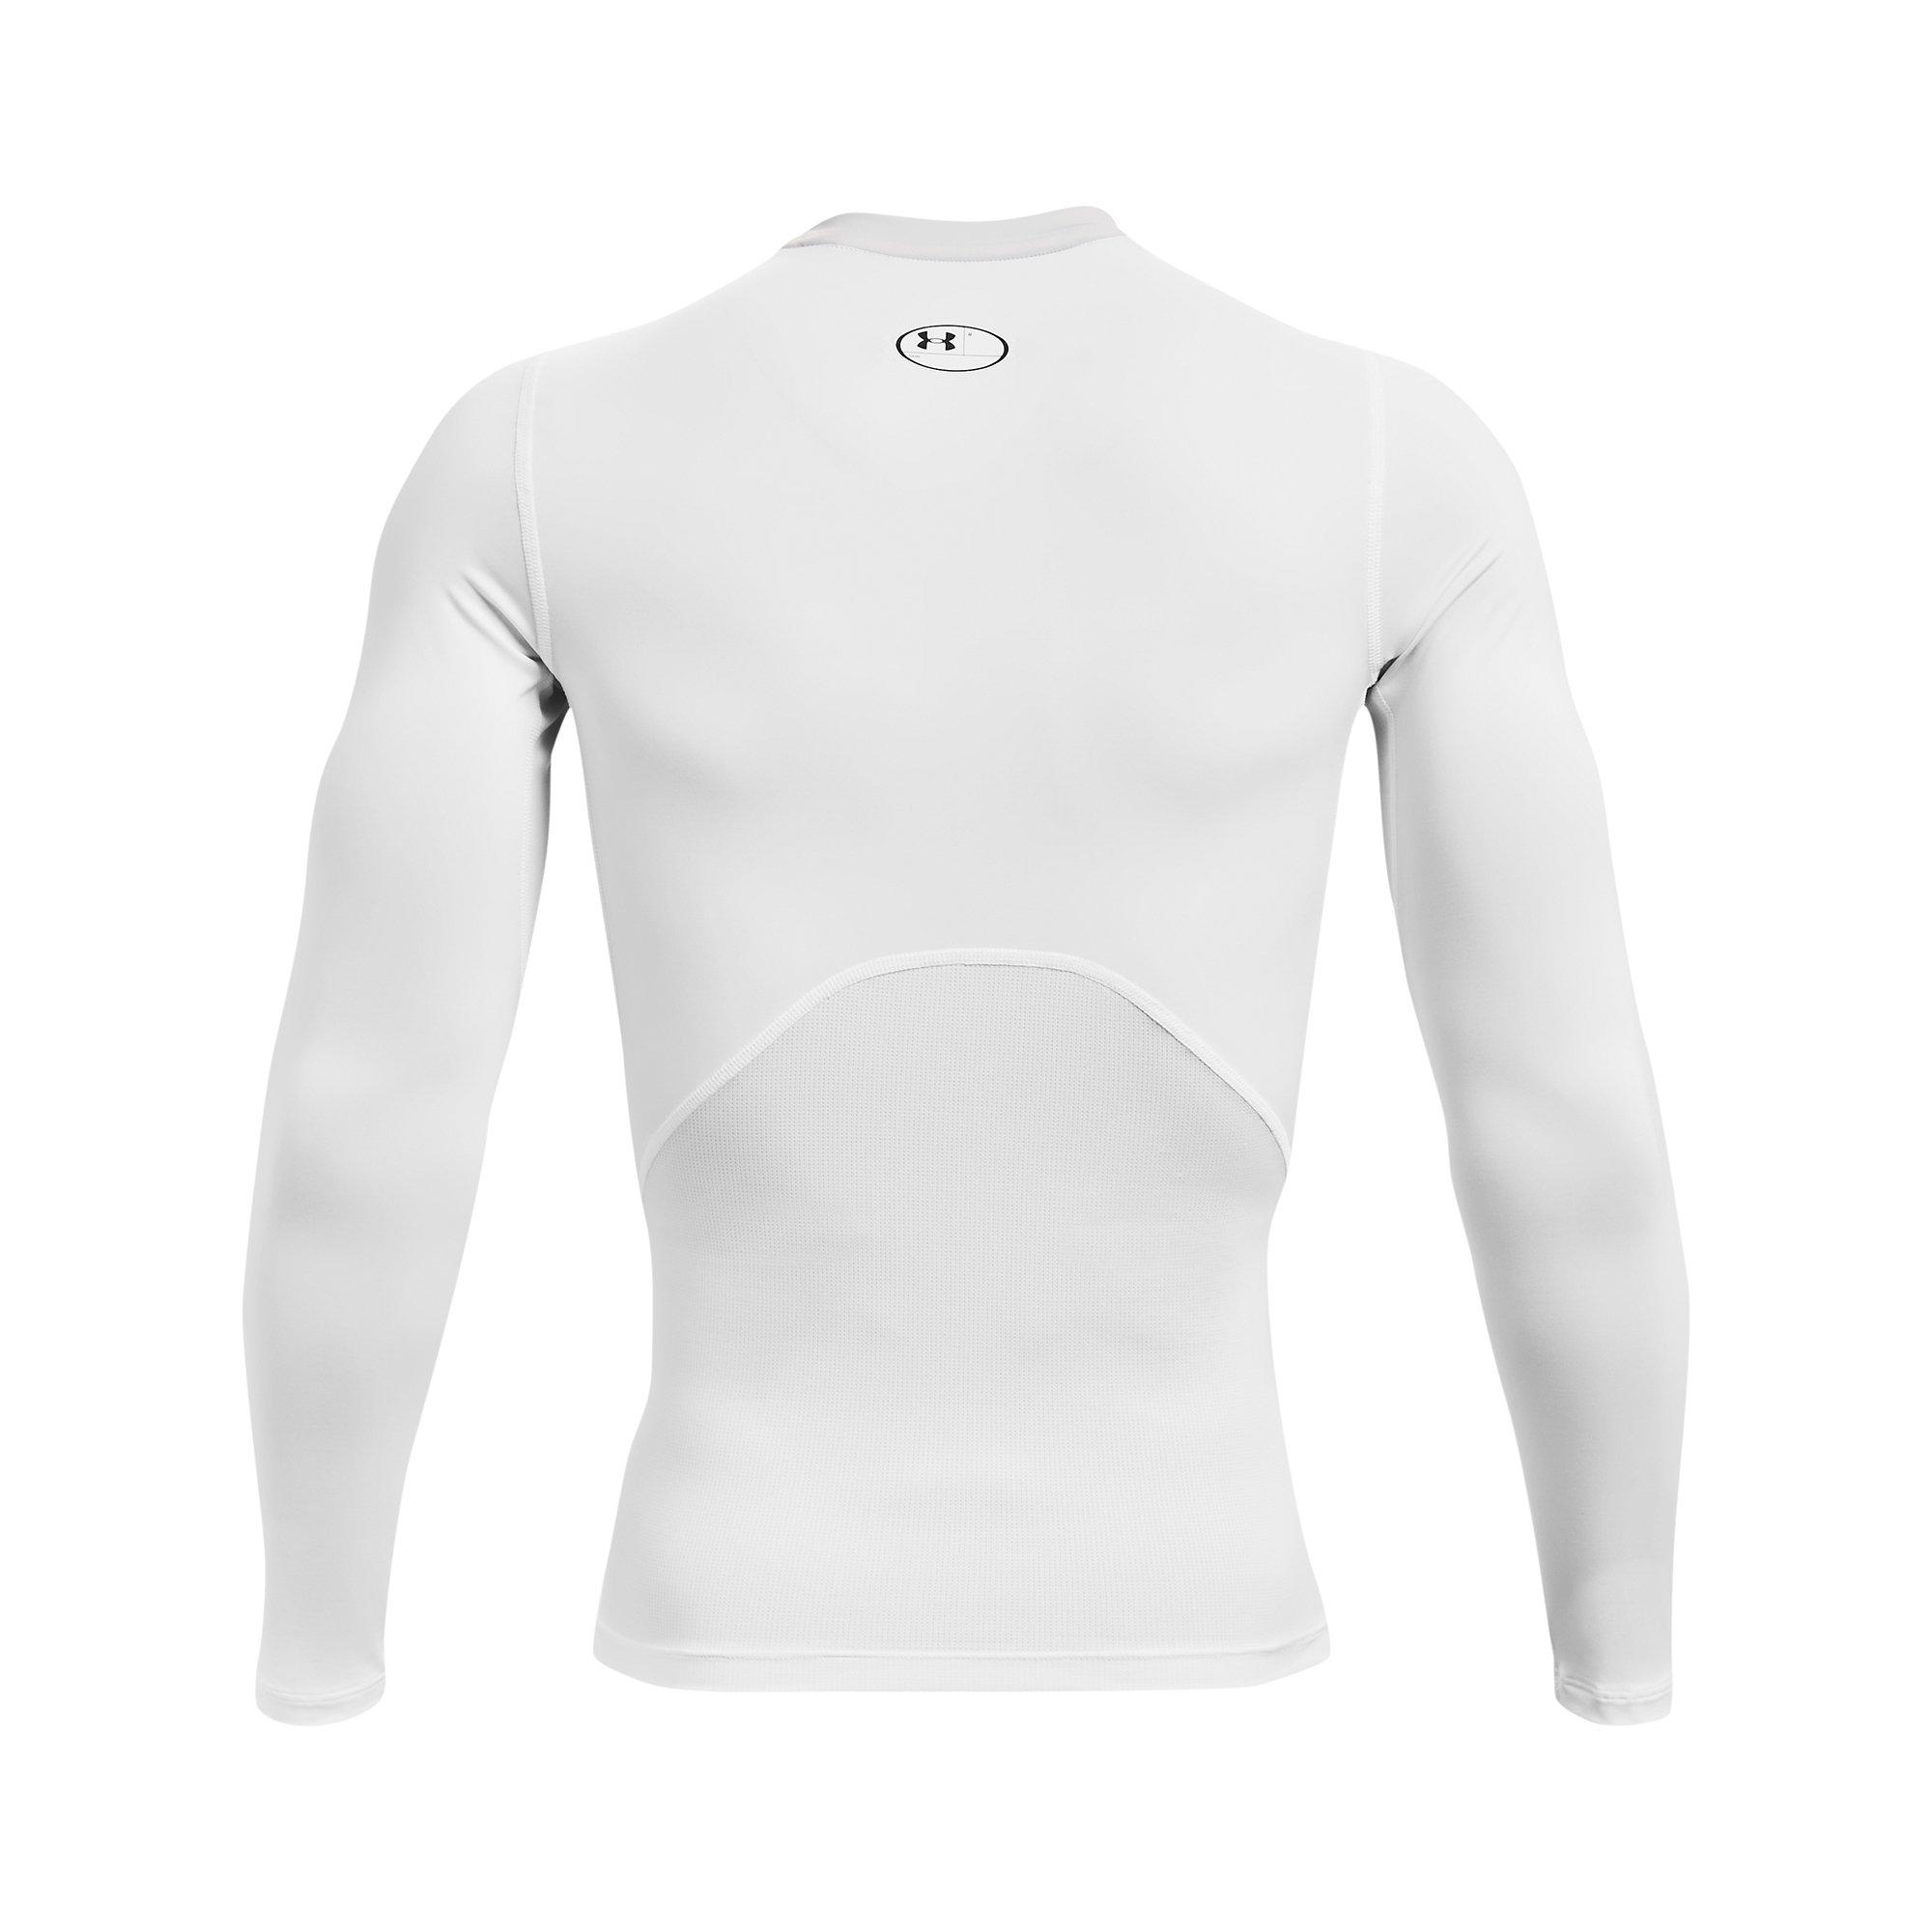 Under Armour Men's White HeatGear Long-Sleeve Compression Shirt